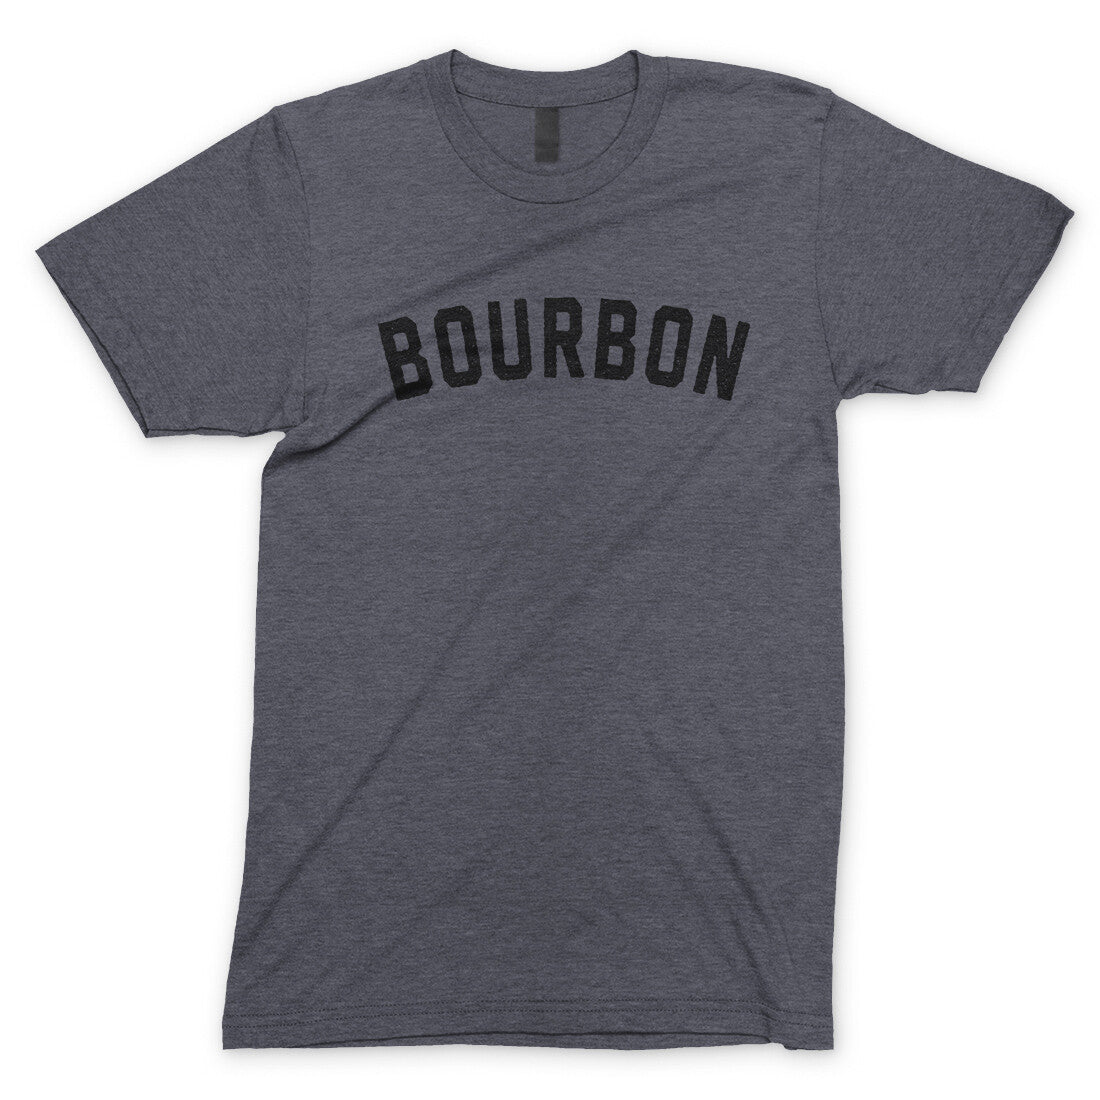 Bourbon in Dark Heather Color